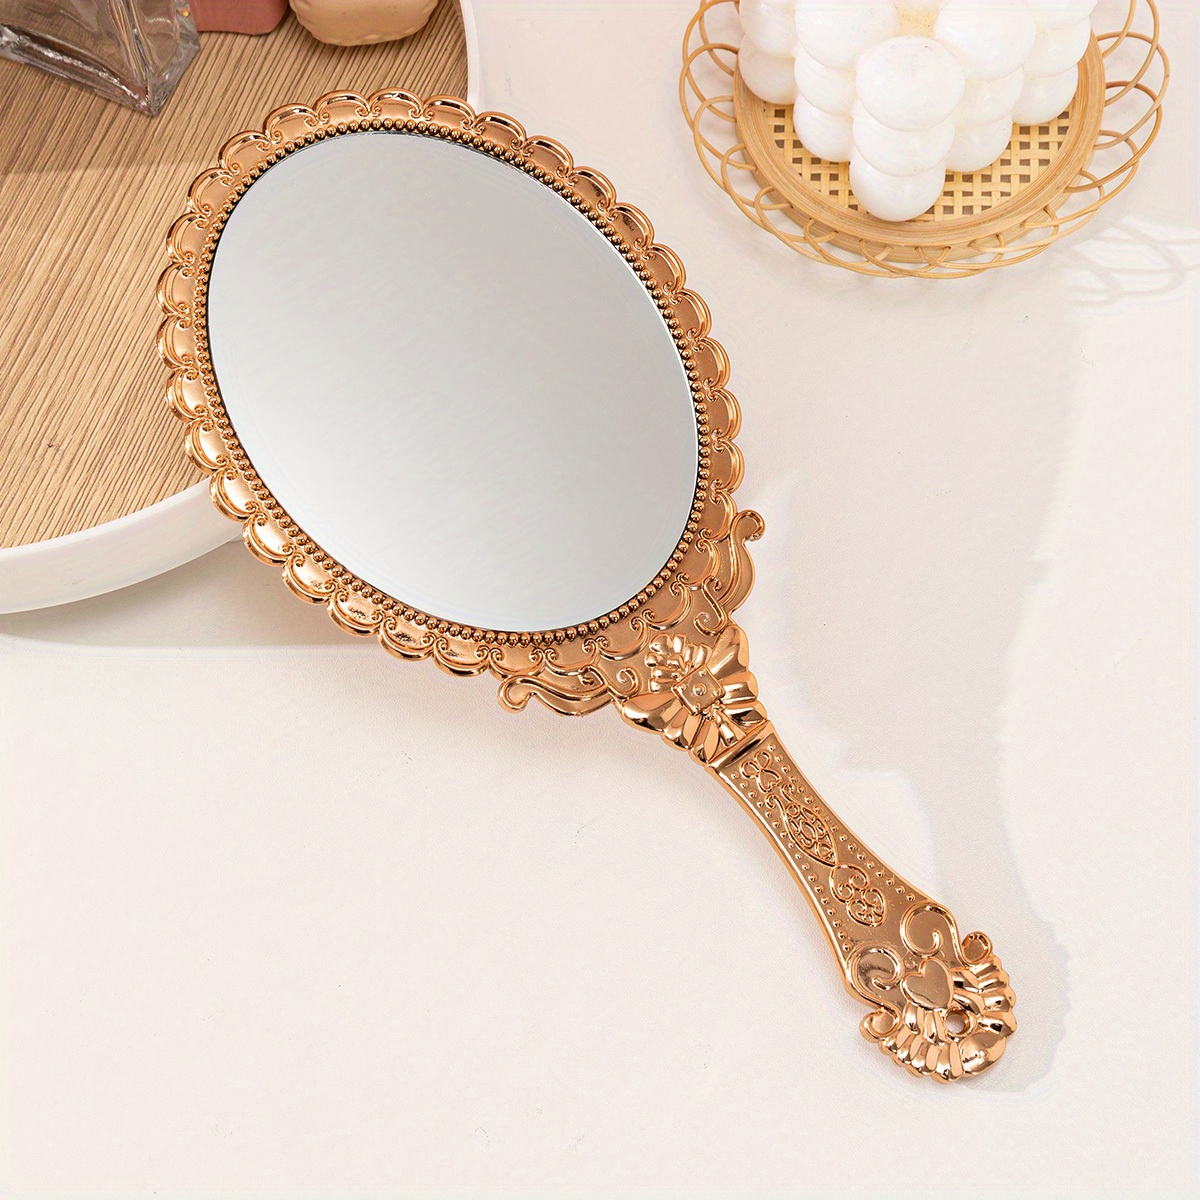 Small Handheld Hand Mirror Compact Travel Makeup Mirror Handheld Cosmetic  Mirror with Handle Personal Mirror Portable Vanity Mirror 3.15 Inch Wide